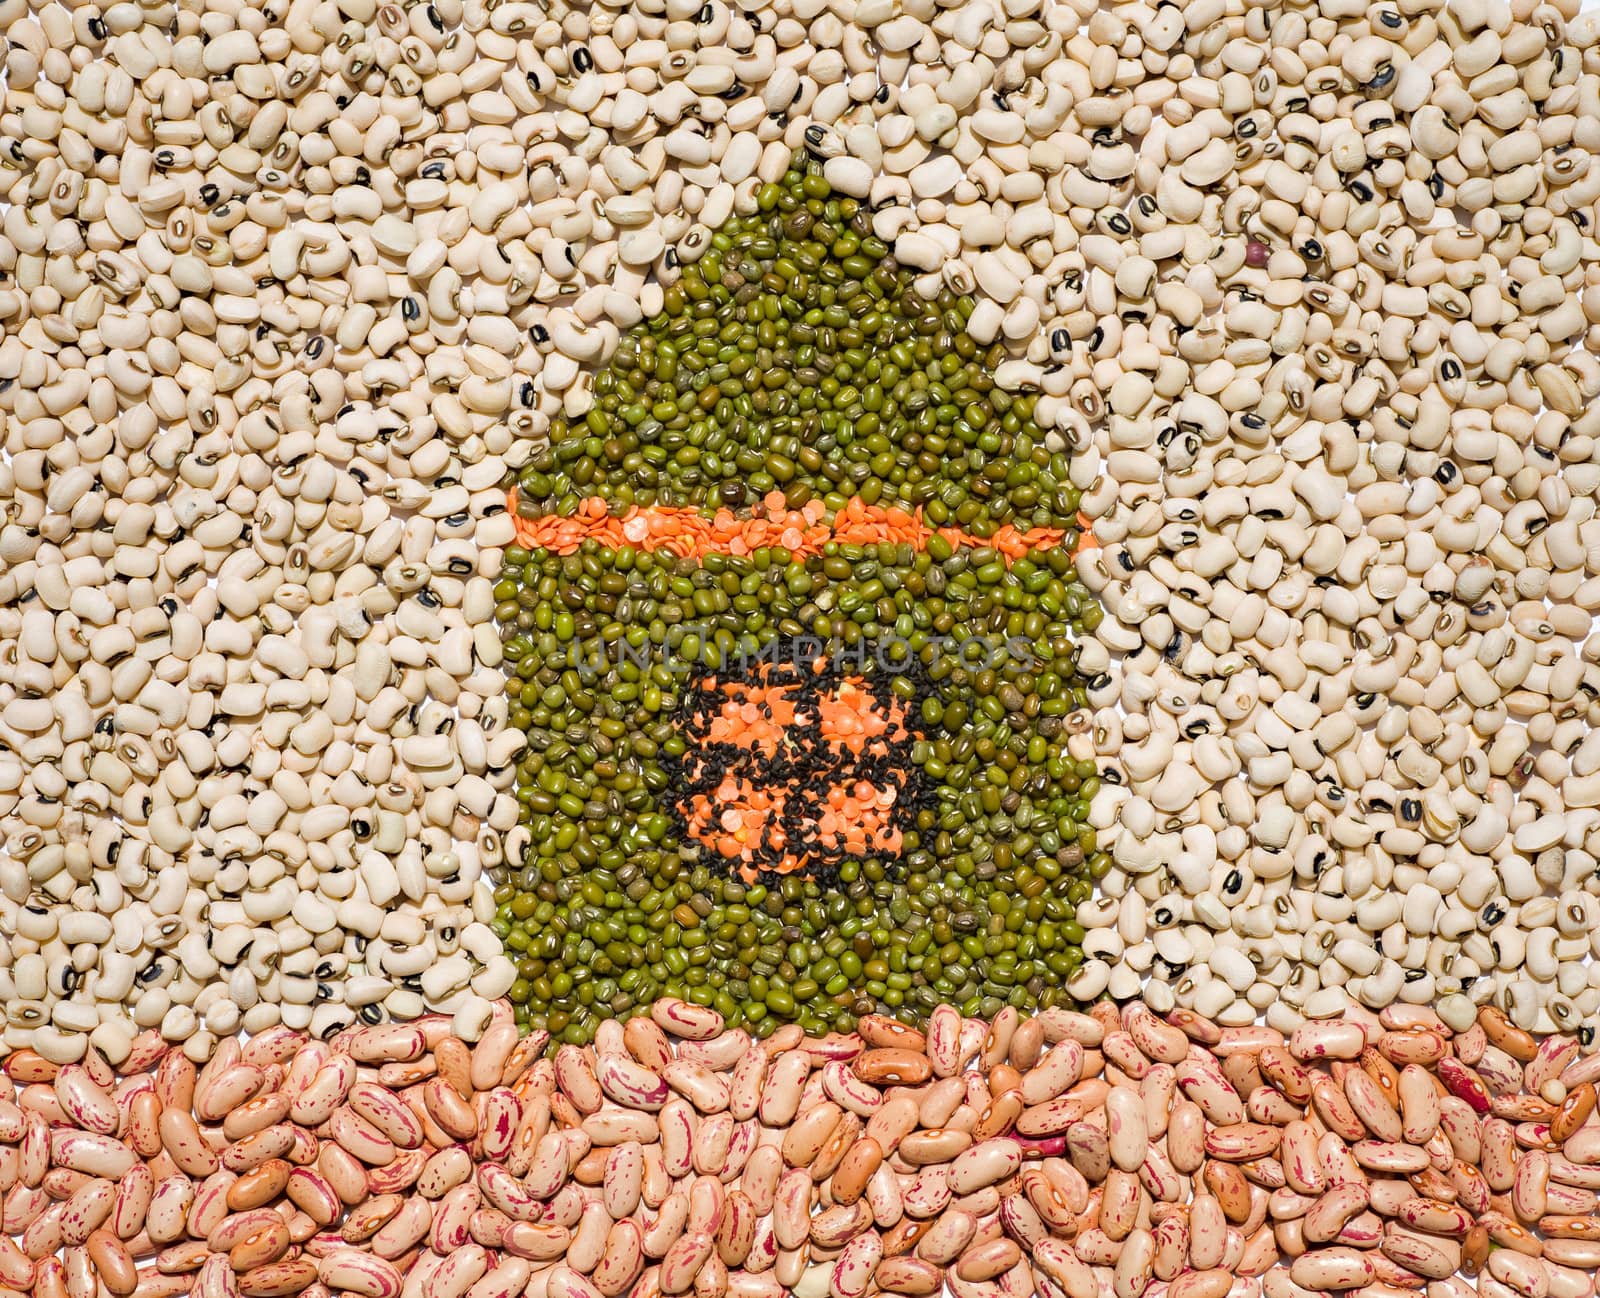 eco house metaphor from grain of bean, lentil, mash